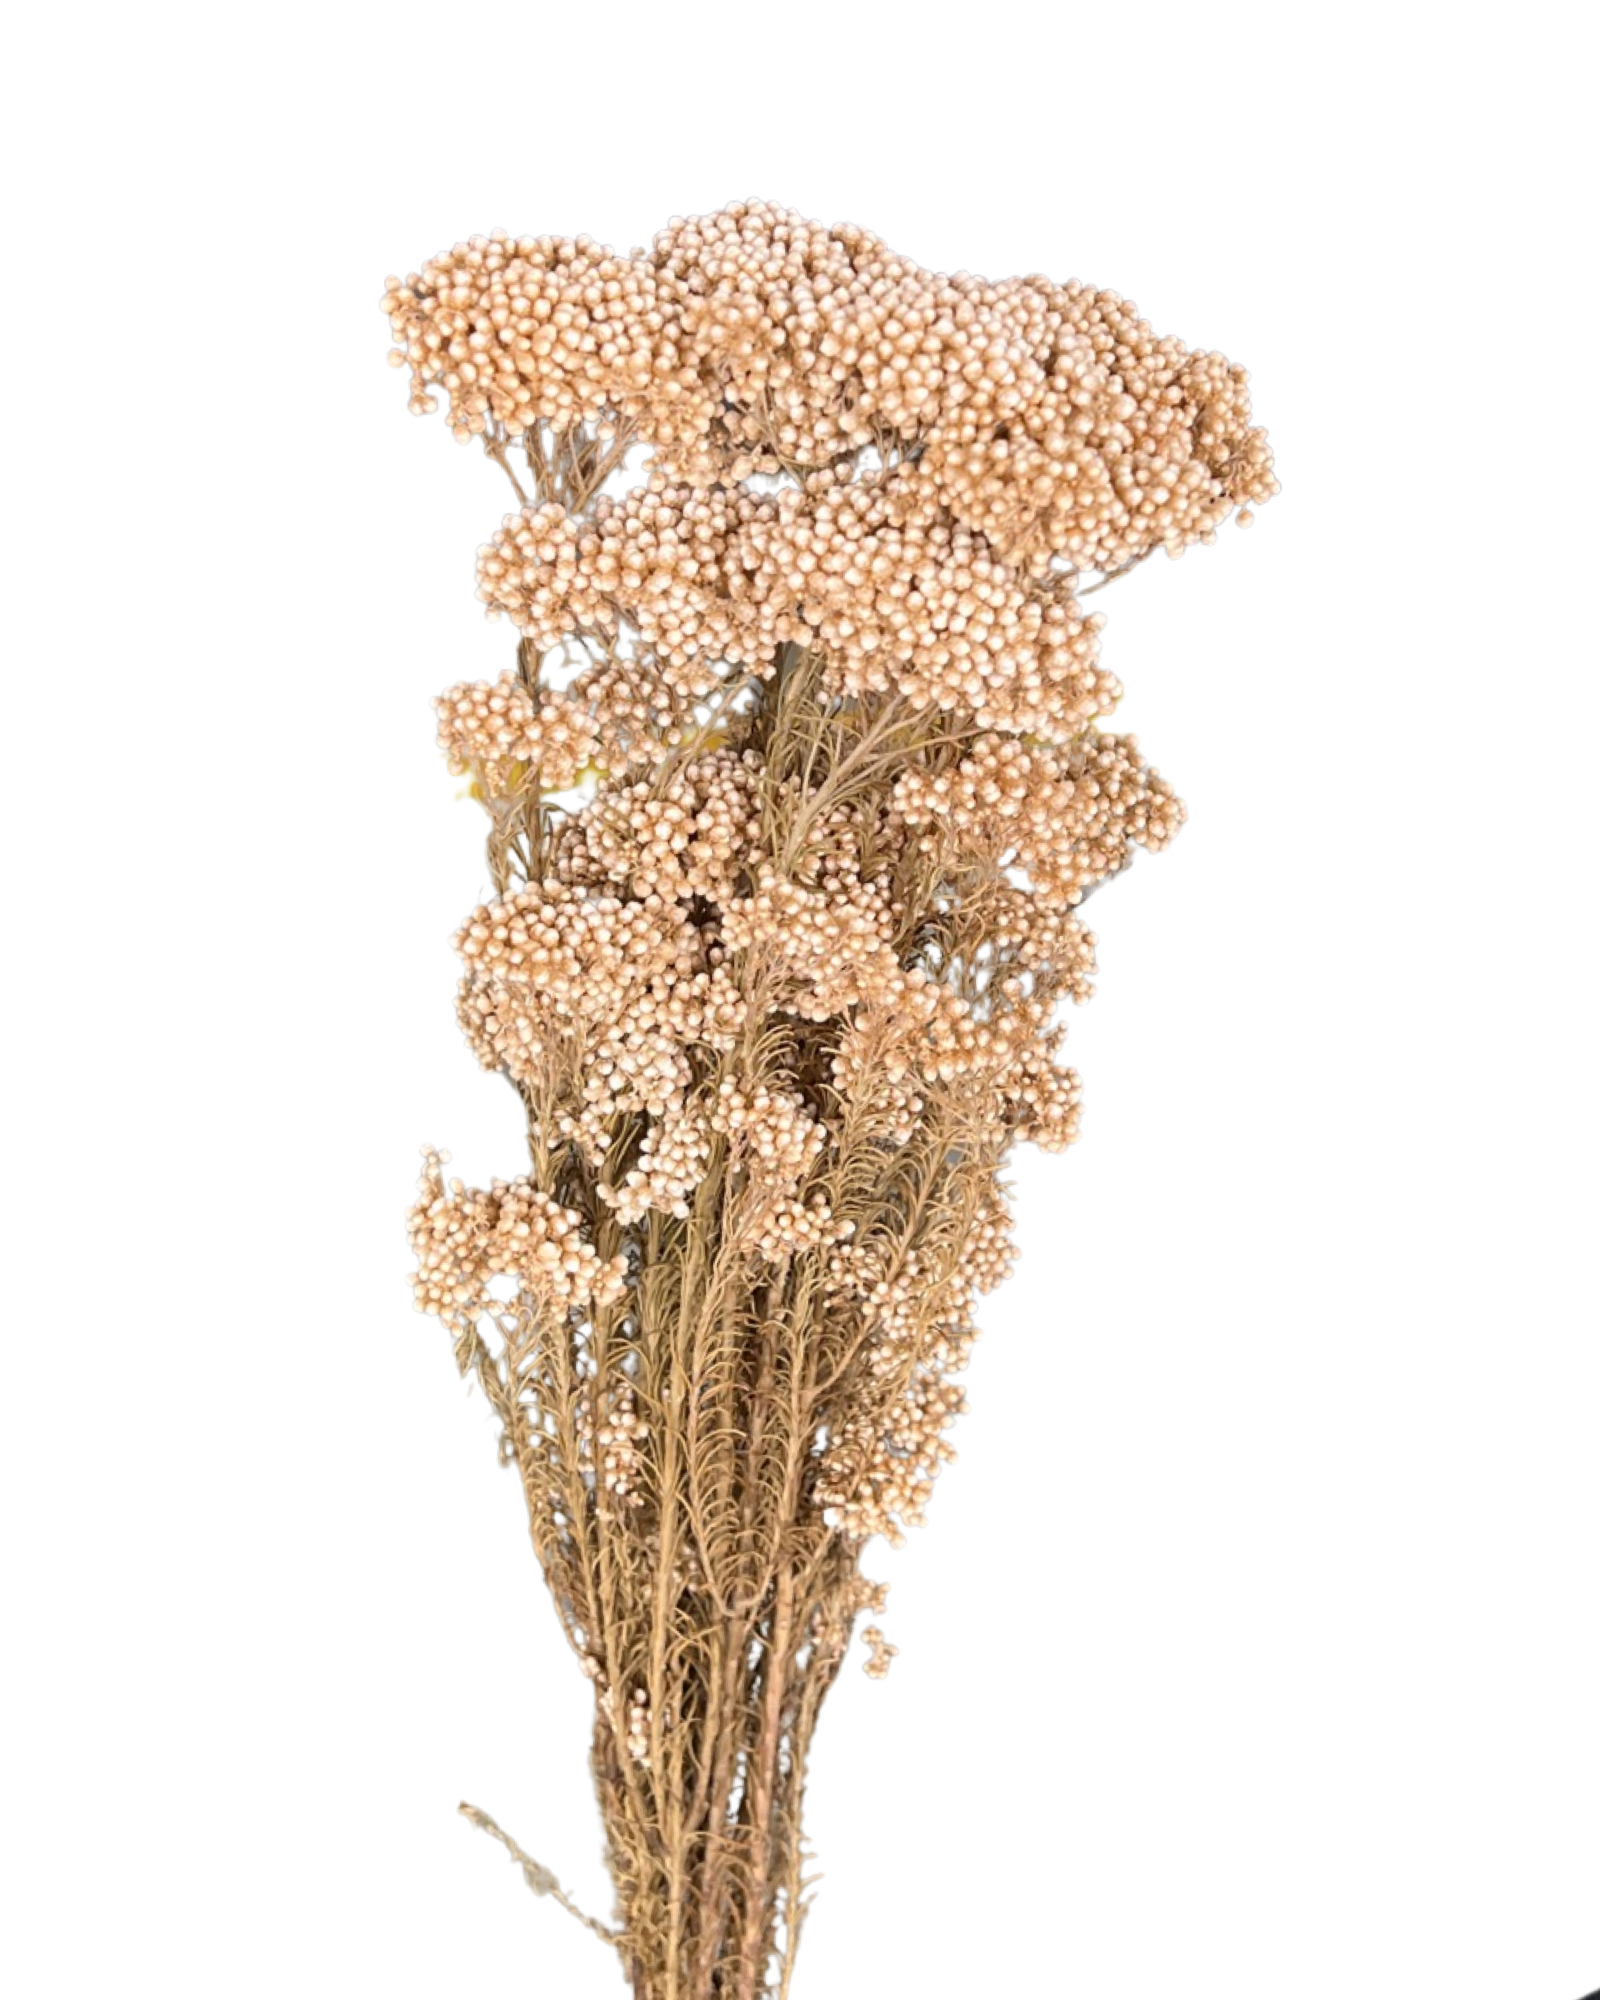 Rice flowers(OZOTHAMNUS DIAOSMIFOLIUS) - Peach